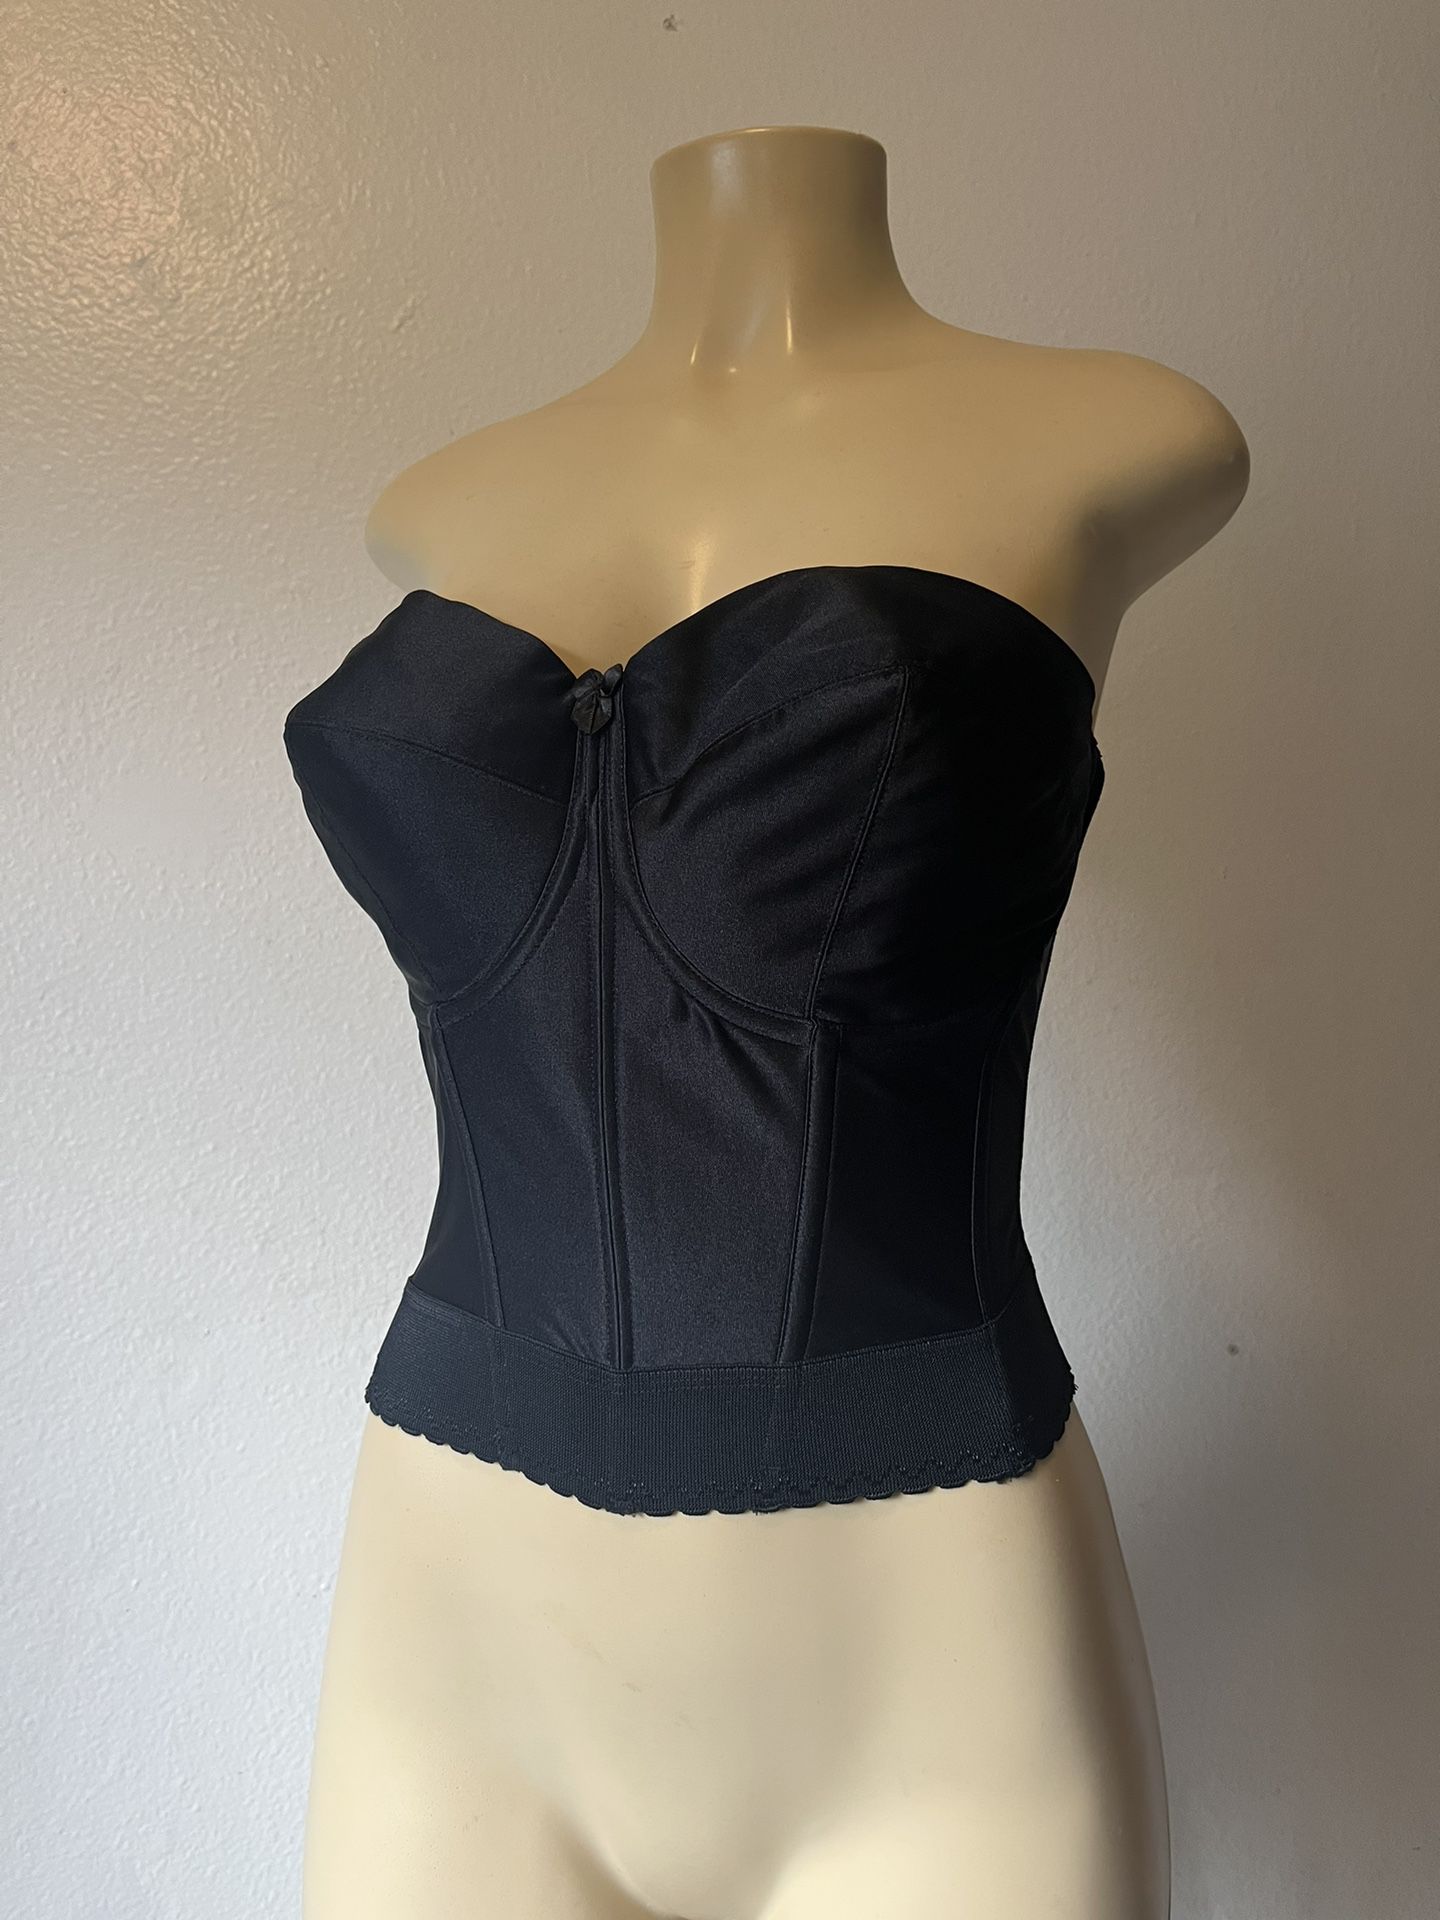 Vintage great quality corset bra